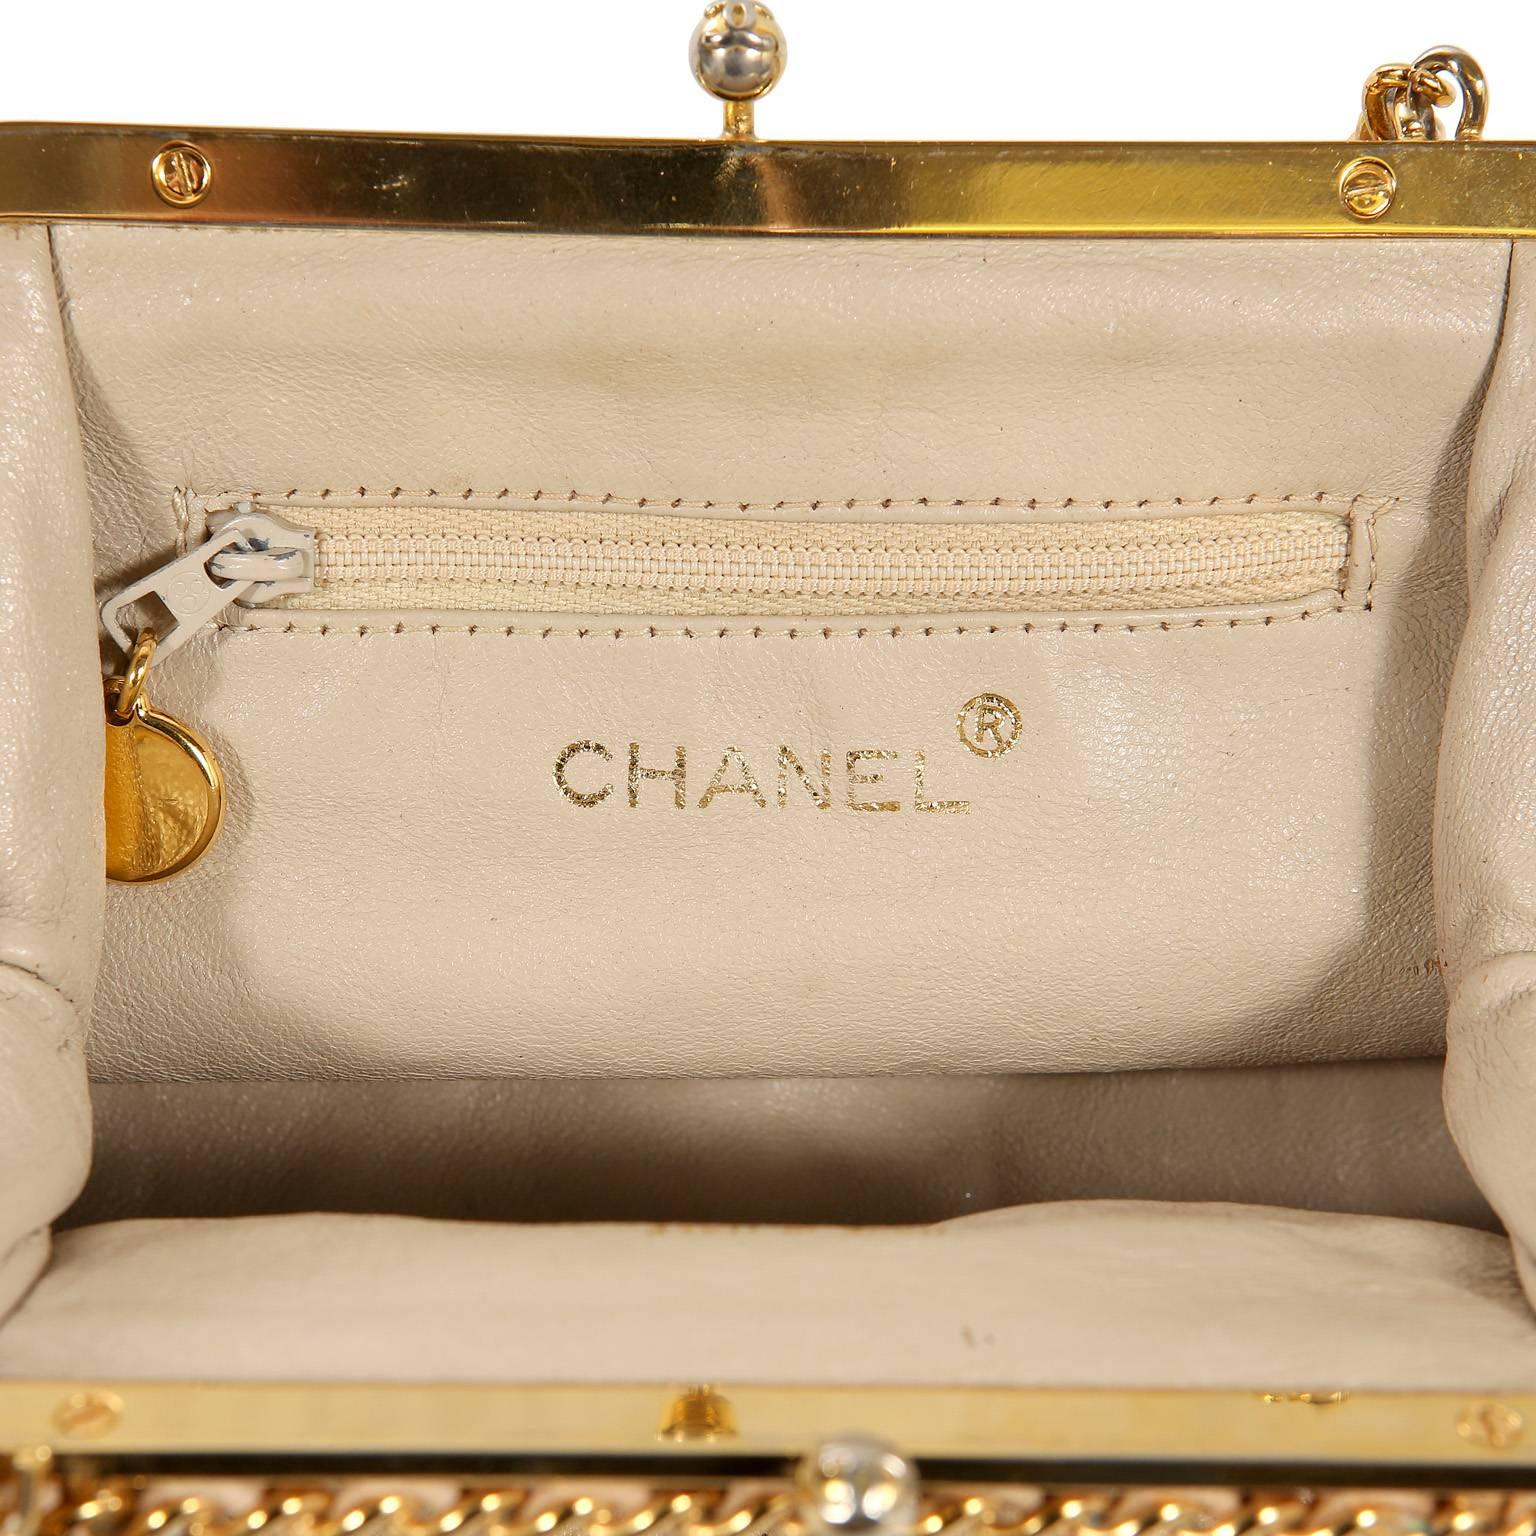 Chanel Beige Leather Kiss Lock Bag 2